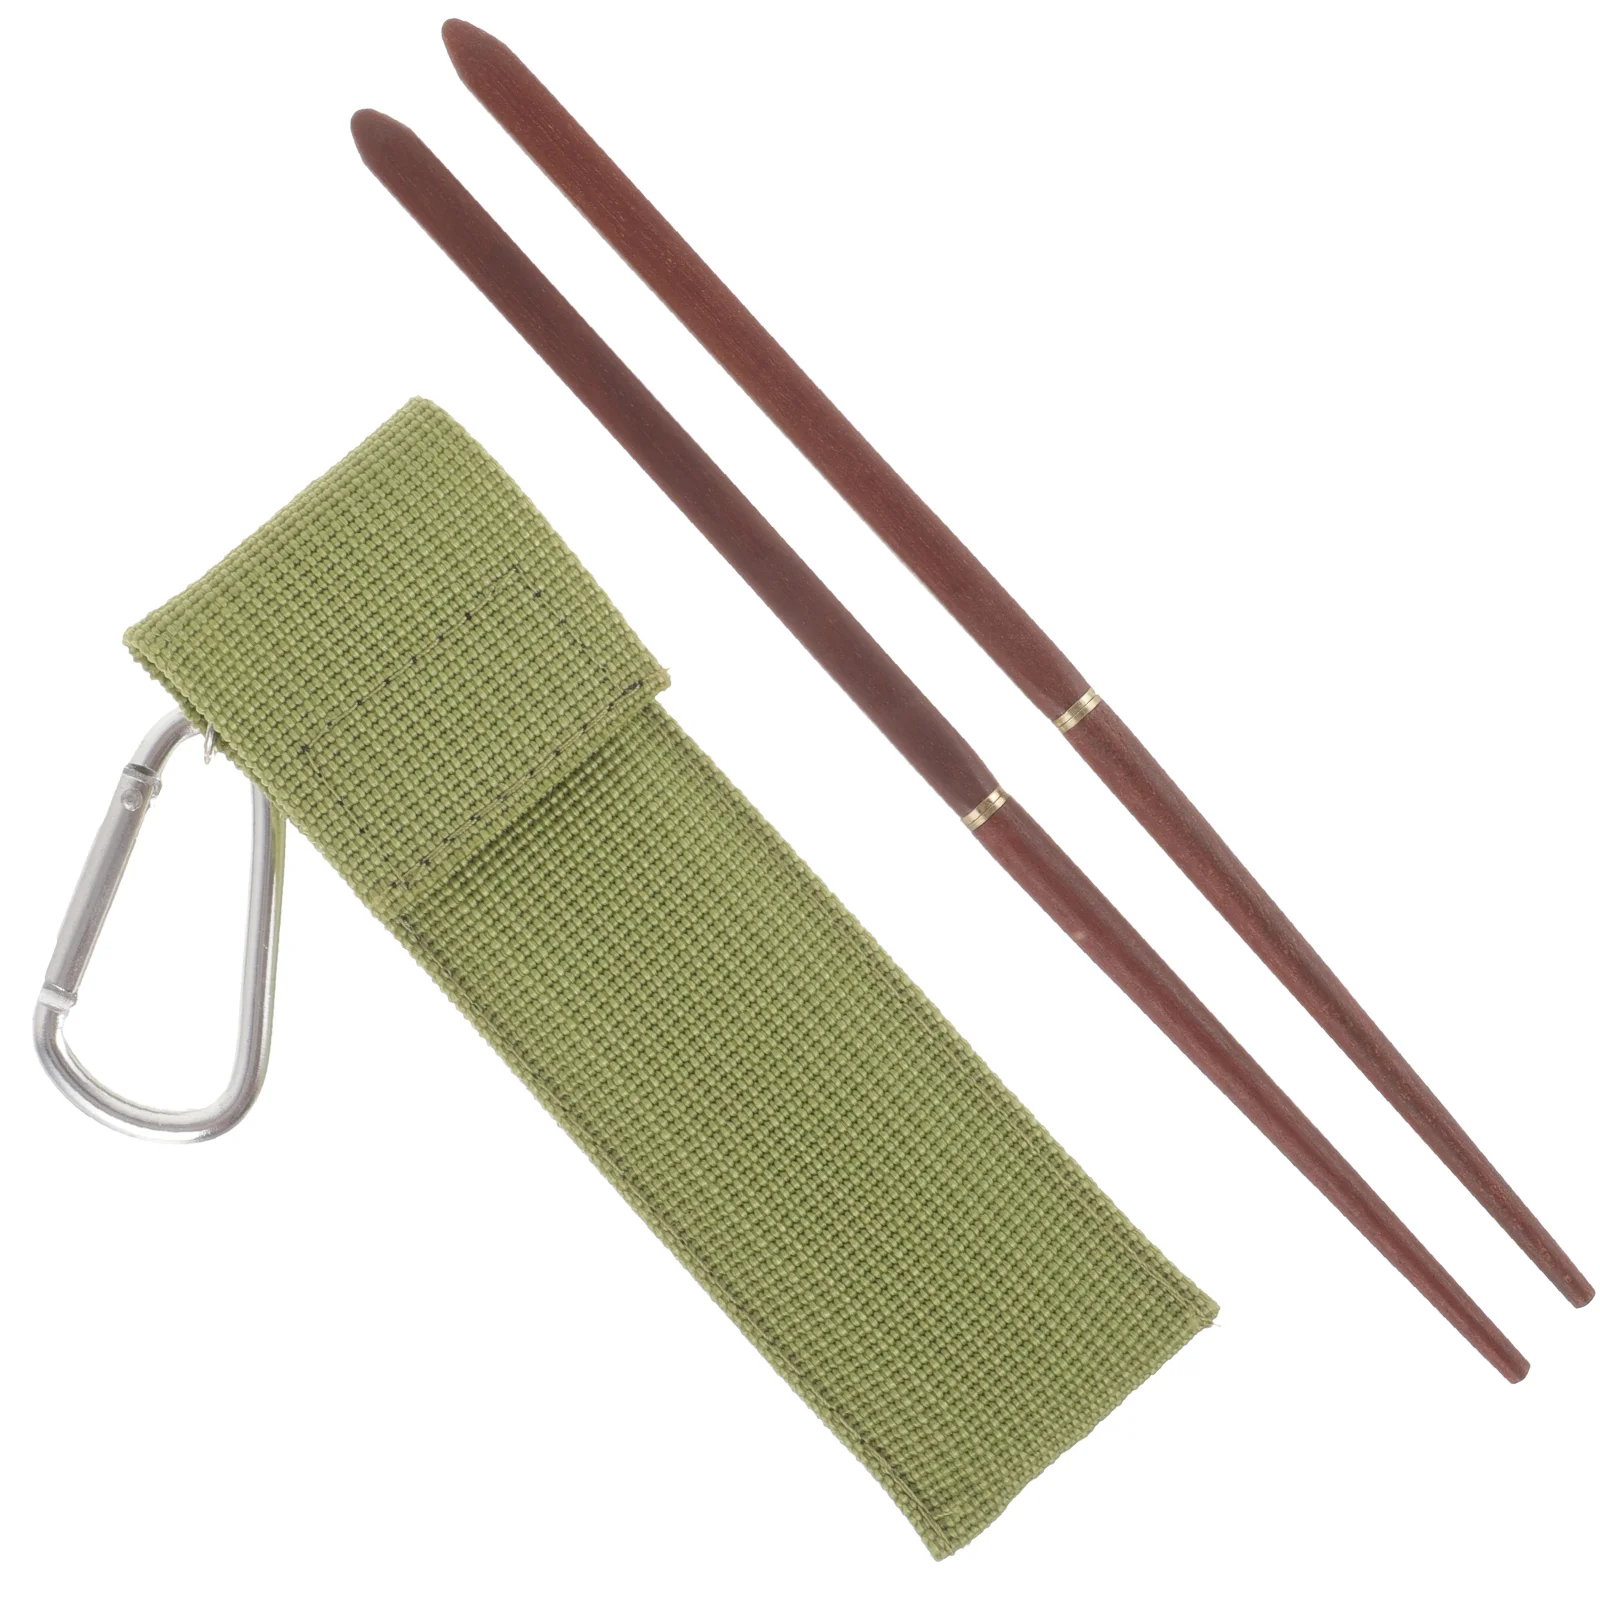 

1 Pair Portable Chopsticks Travel Chopsticks Household Chopsticks Camping Dinner Tool and Bag